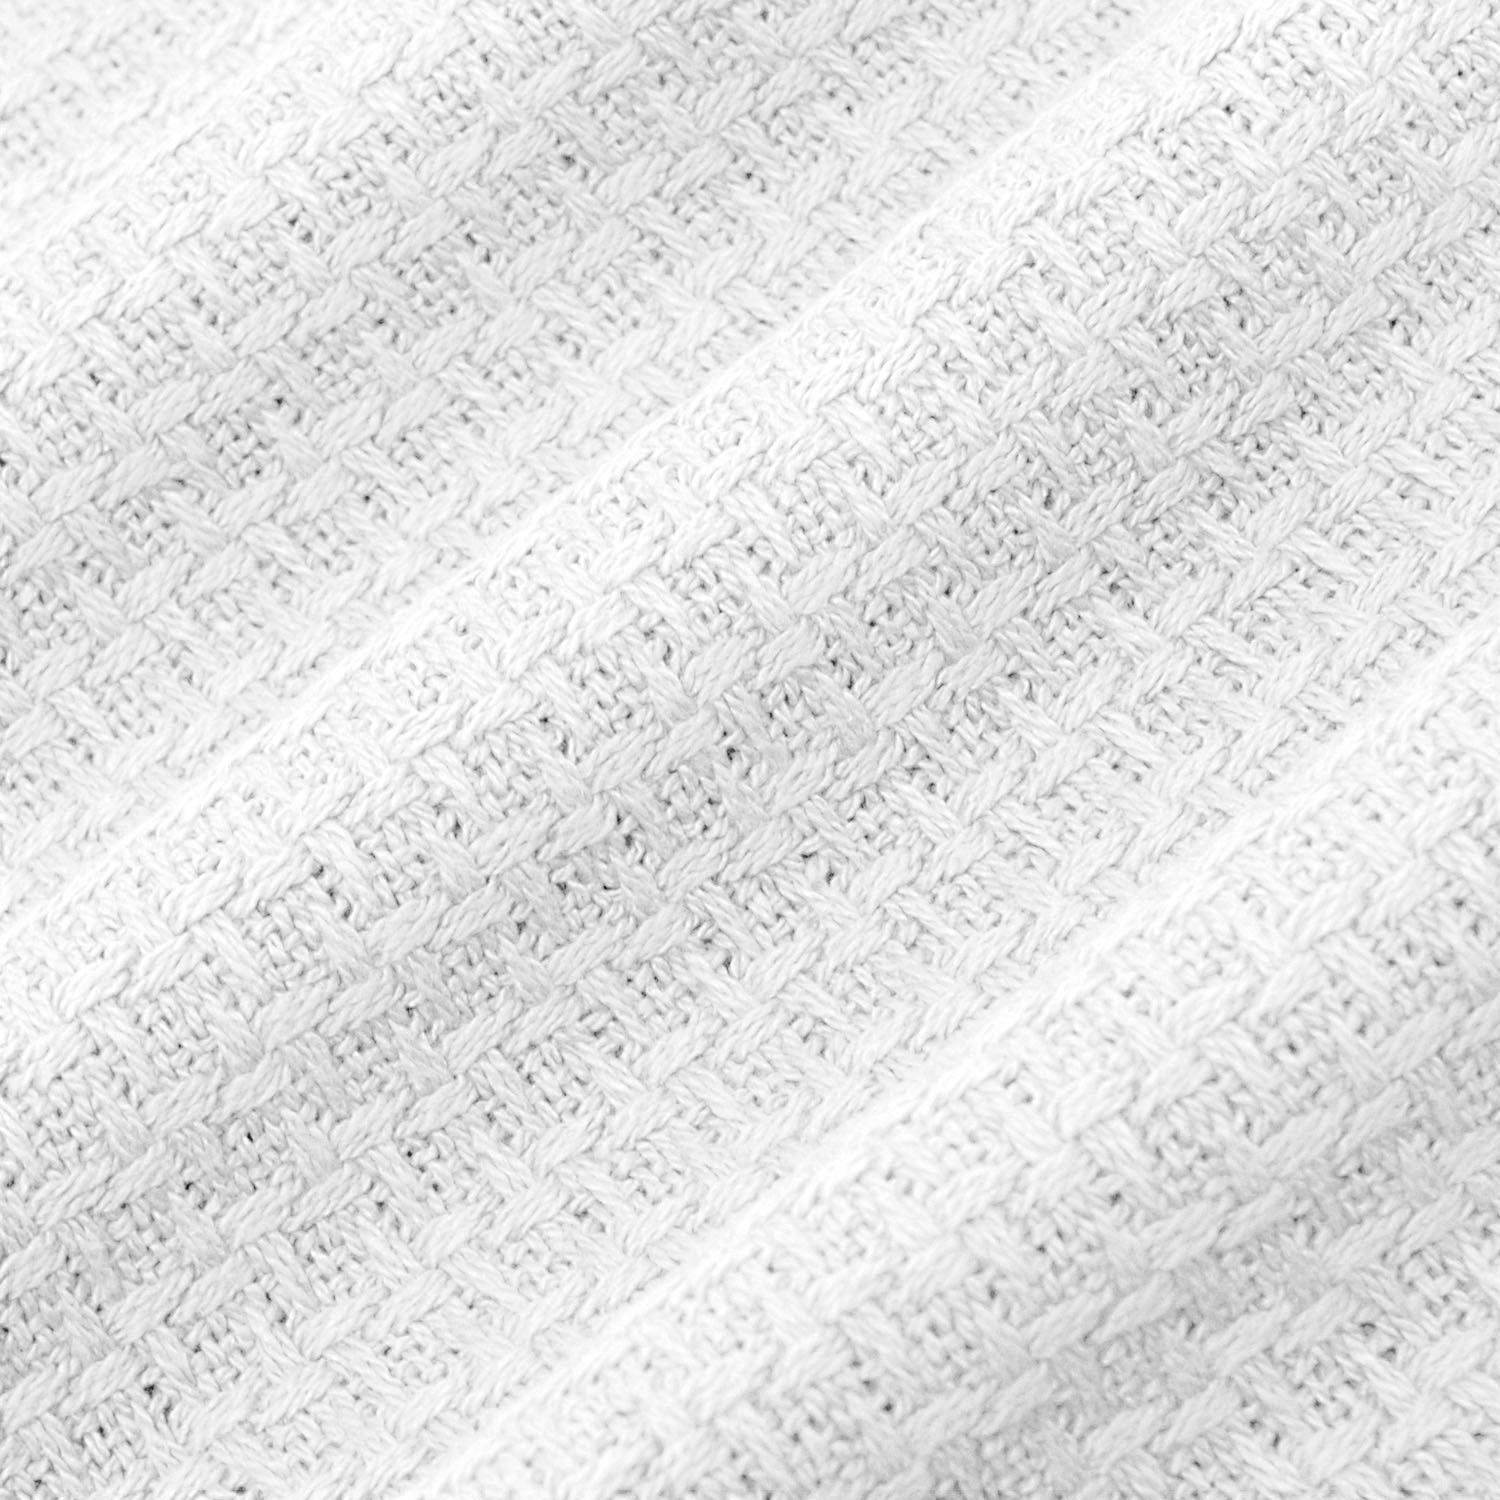 Basket Weave Cotton Blanket White - Fabric